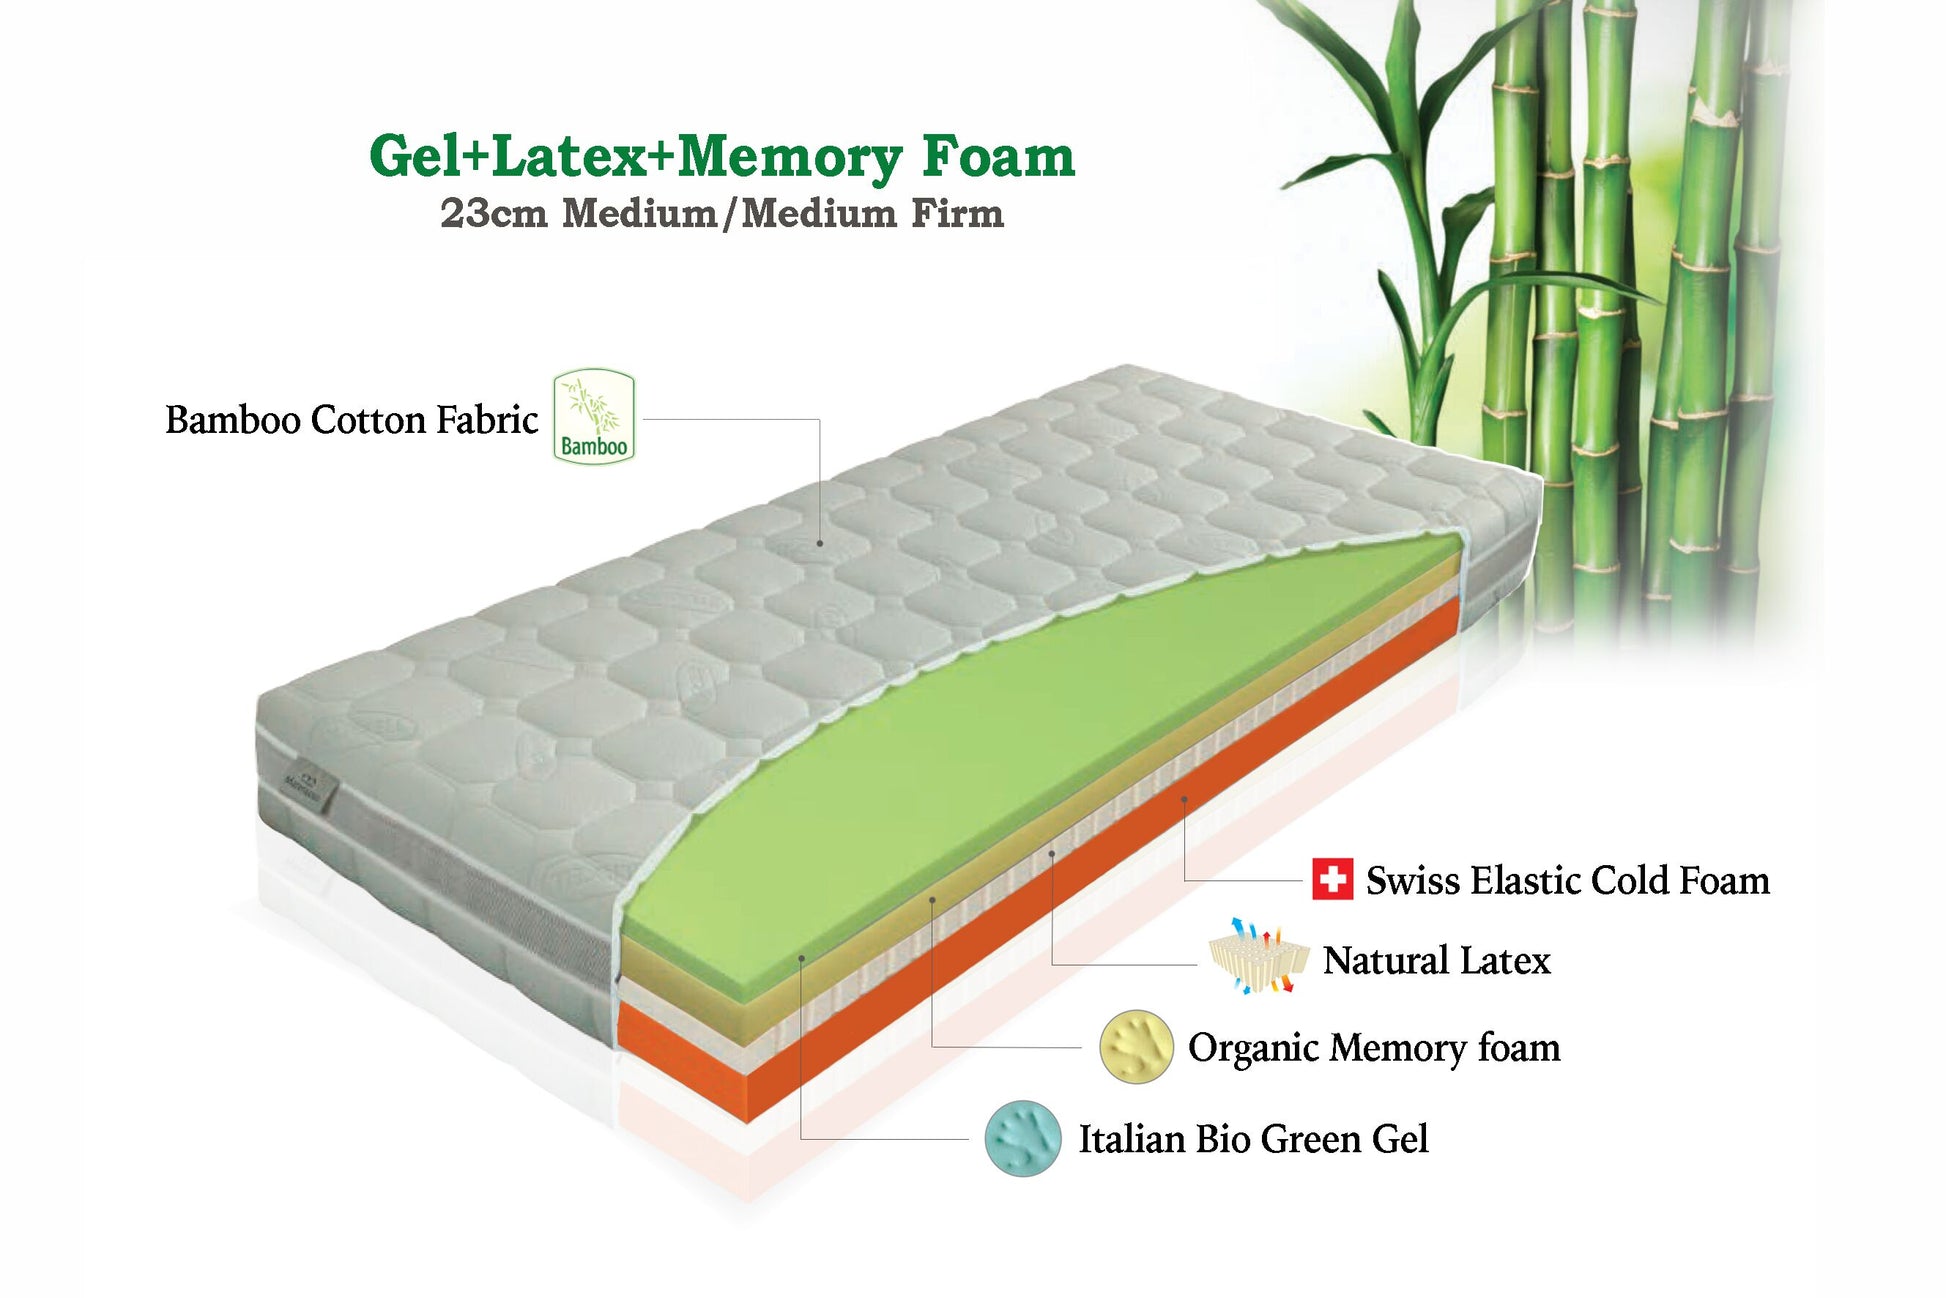 Made in Europe, Organic Gel, Memory Latex Foam Mattress - Dorinca